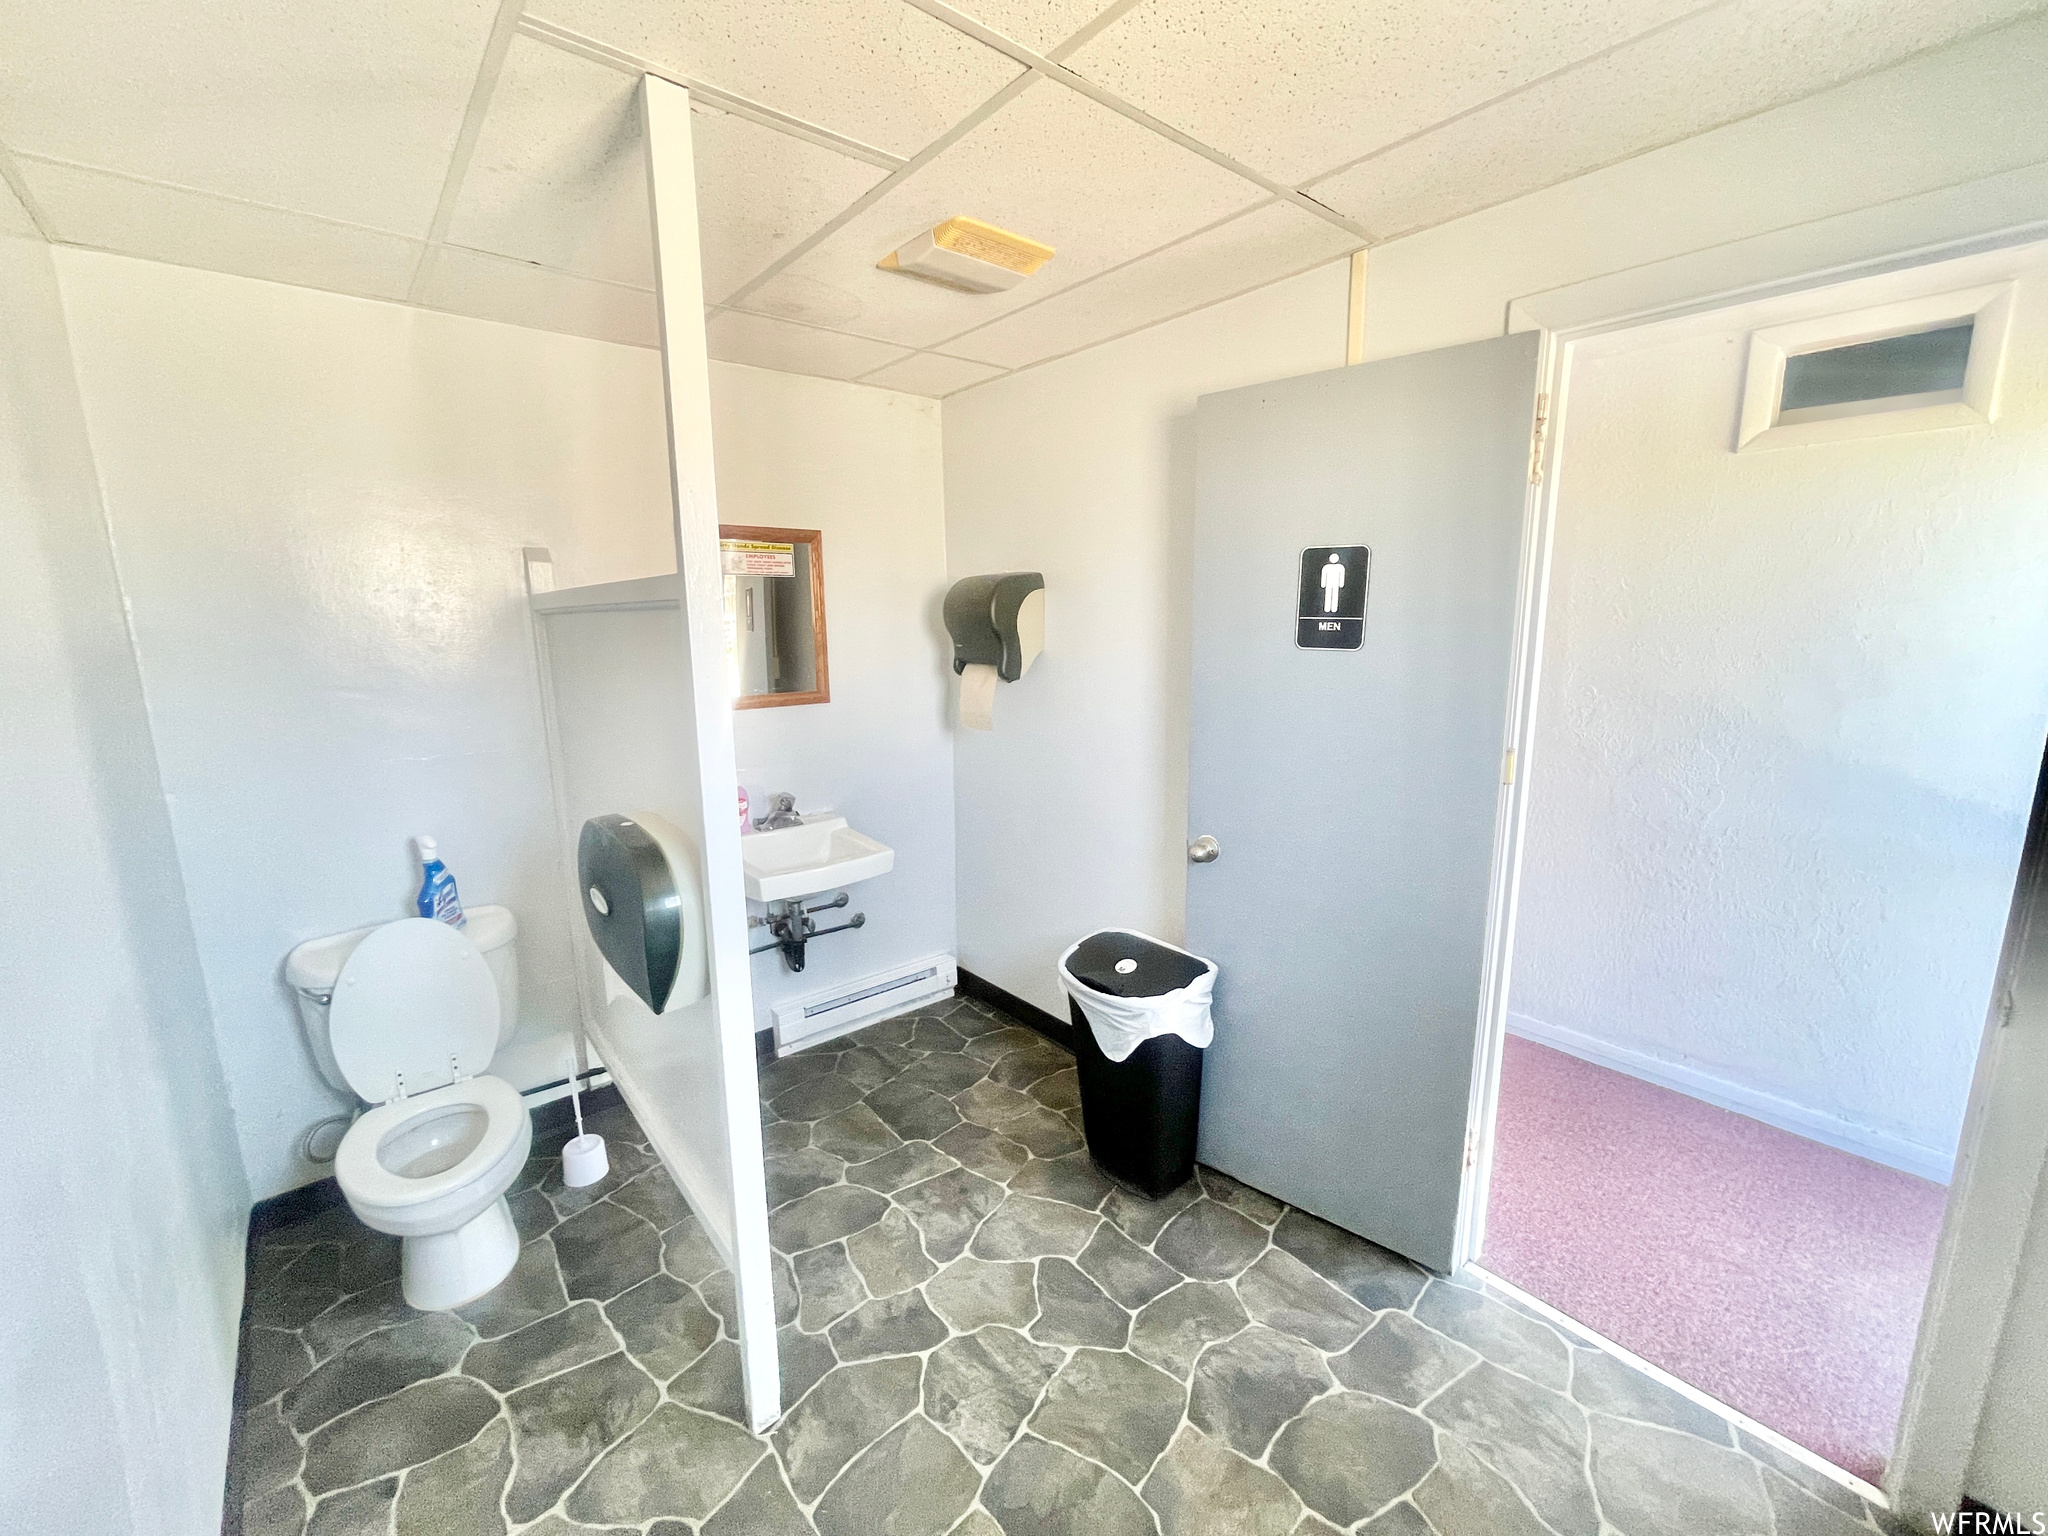 Half bathroom with tile floors, washbasin, and toilet